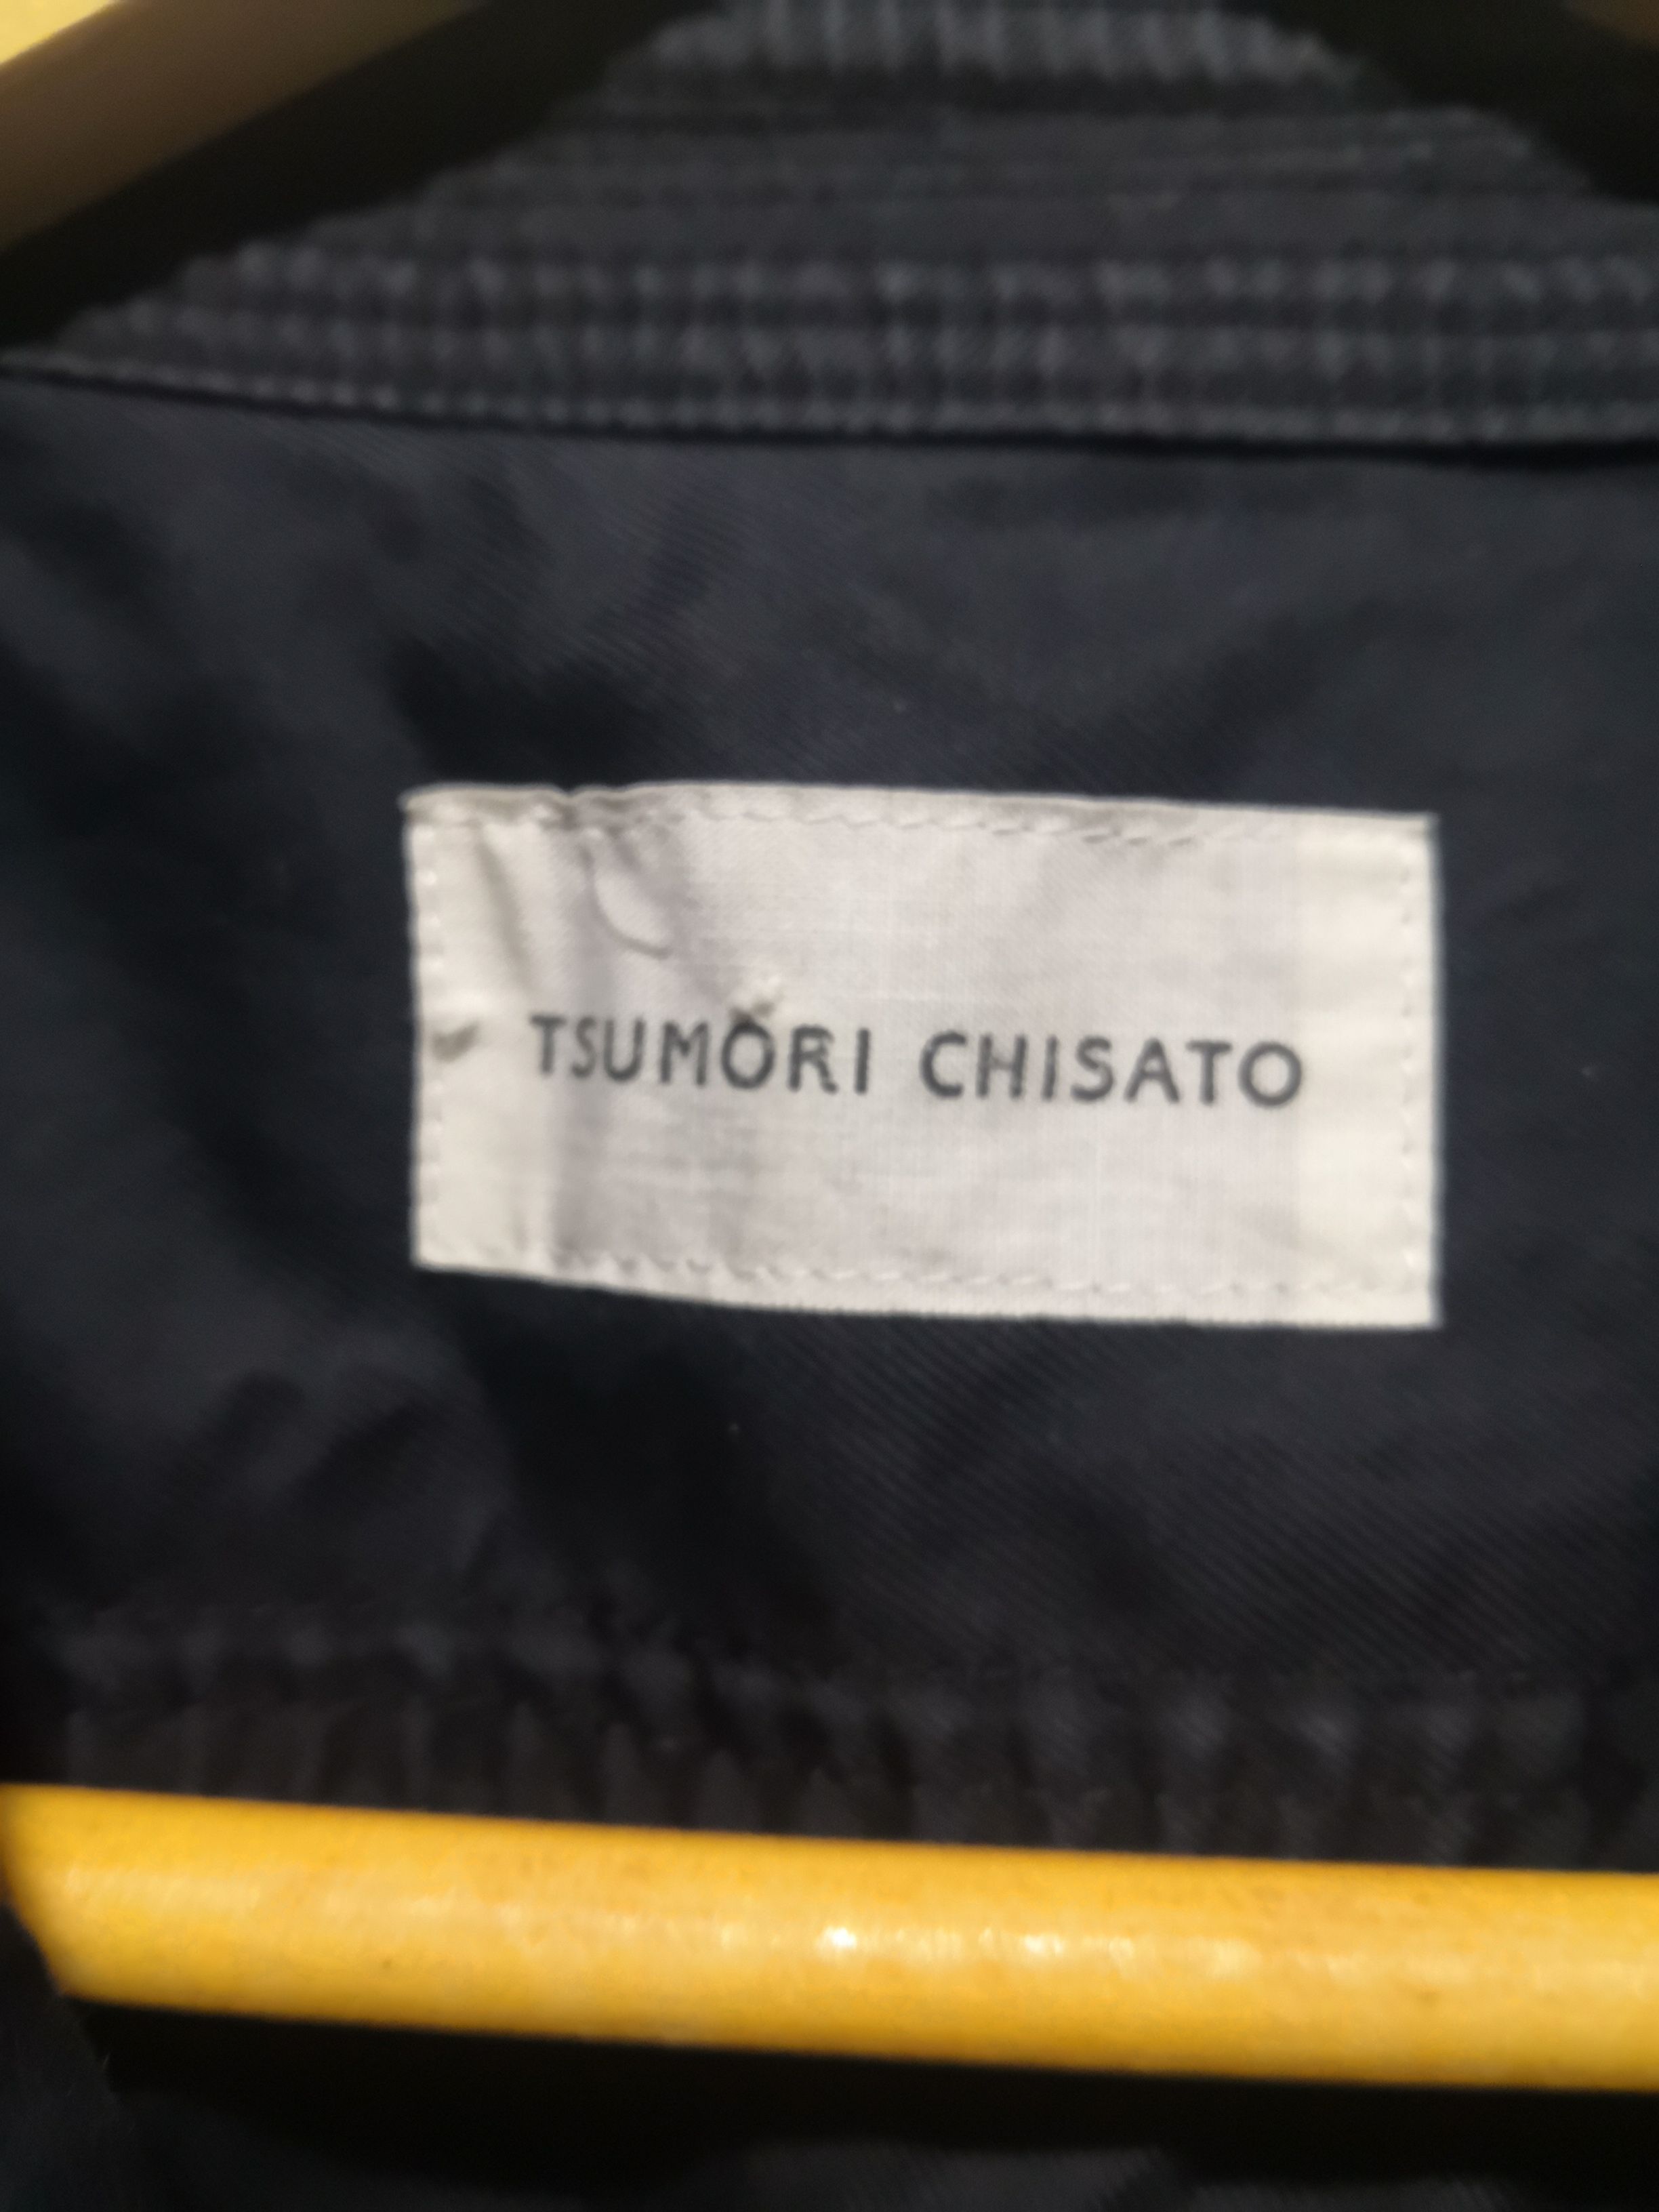 Tsumori Chisato Metal Plate Button Jacket - 5